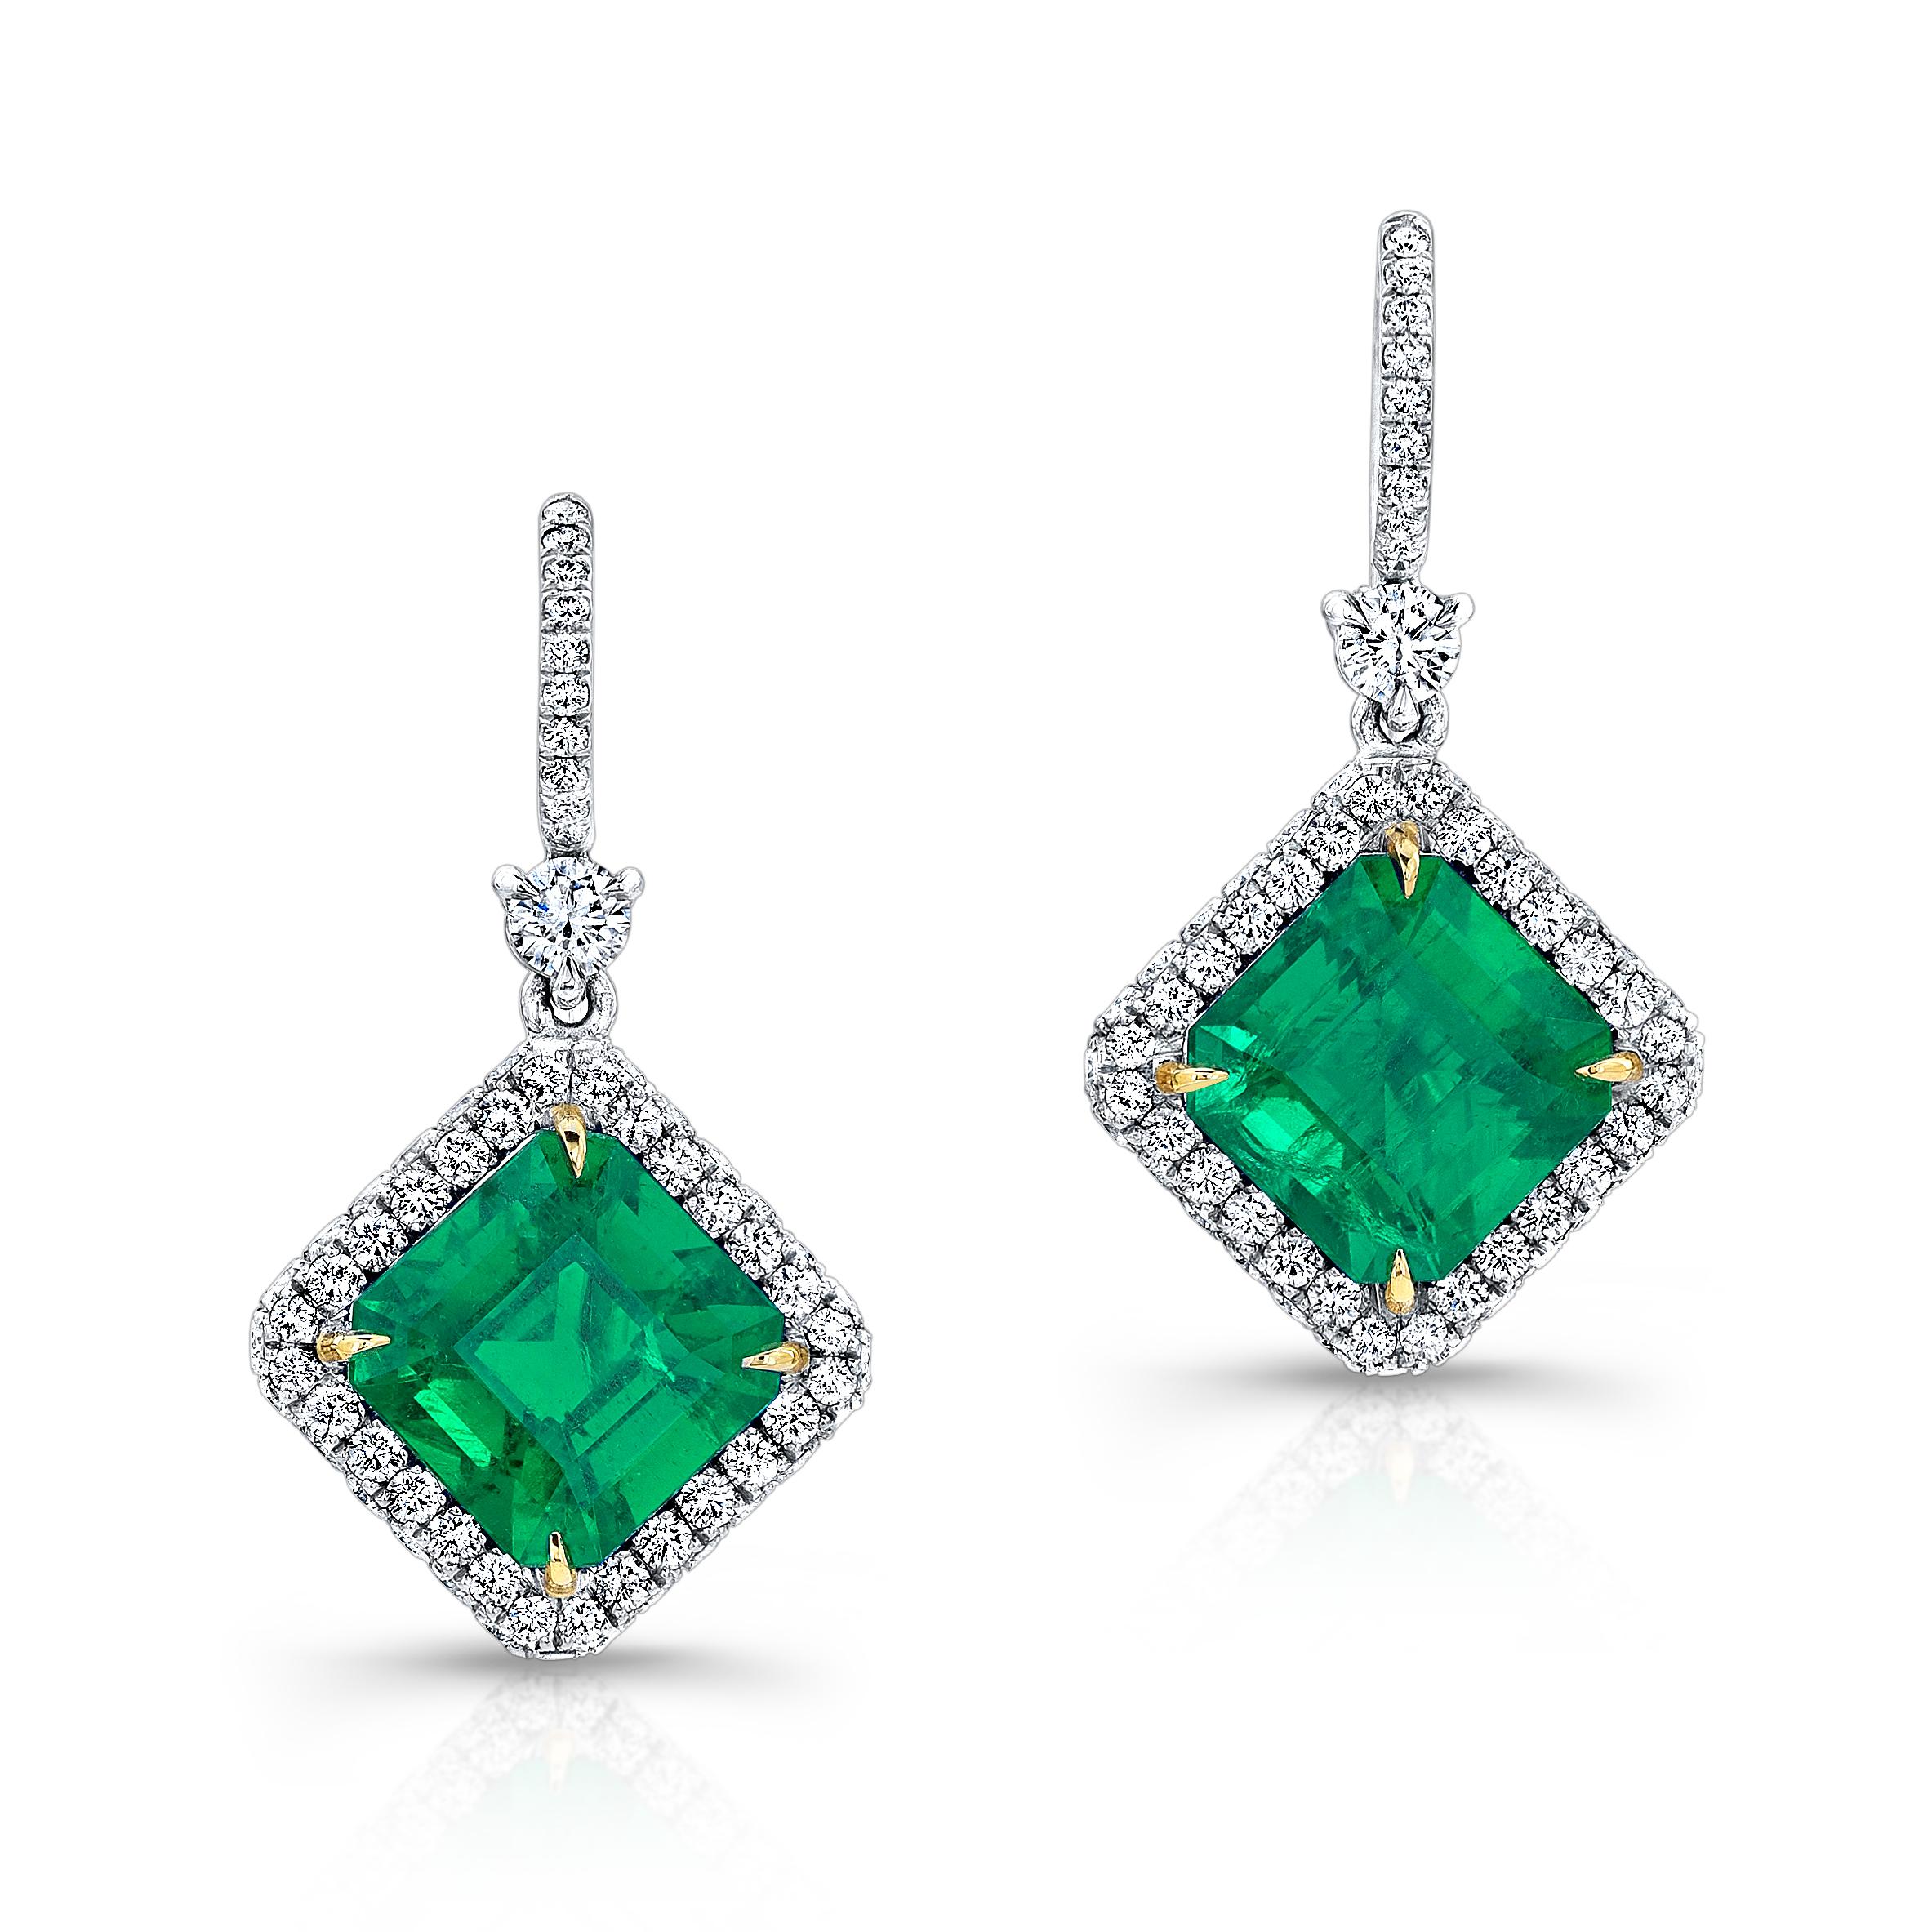 Center Stone: Square emeralds 5 carat each
Side Diamonds: 1 carat F VS